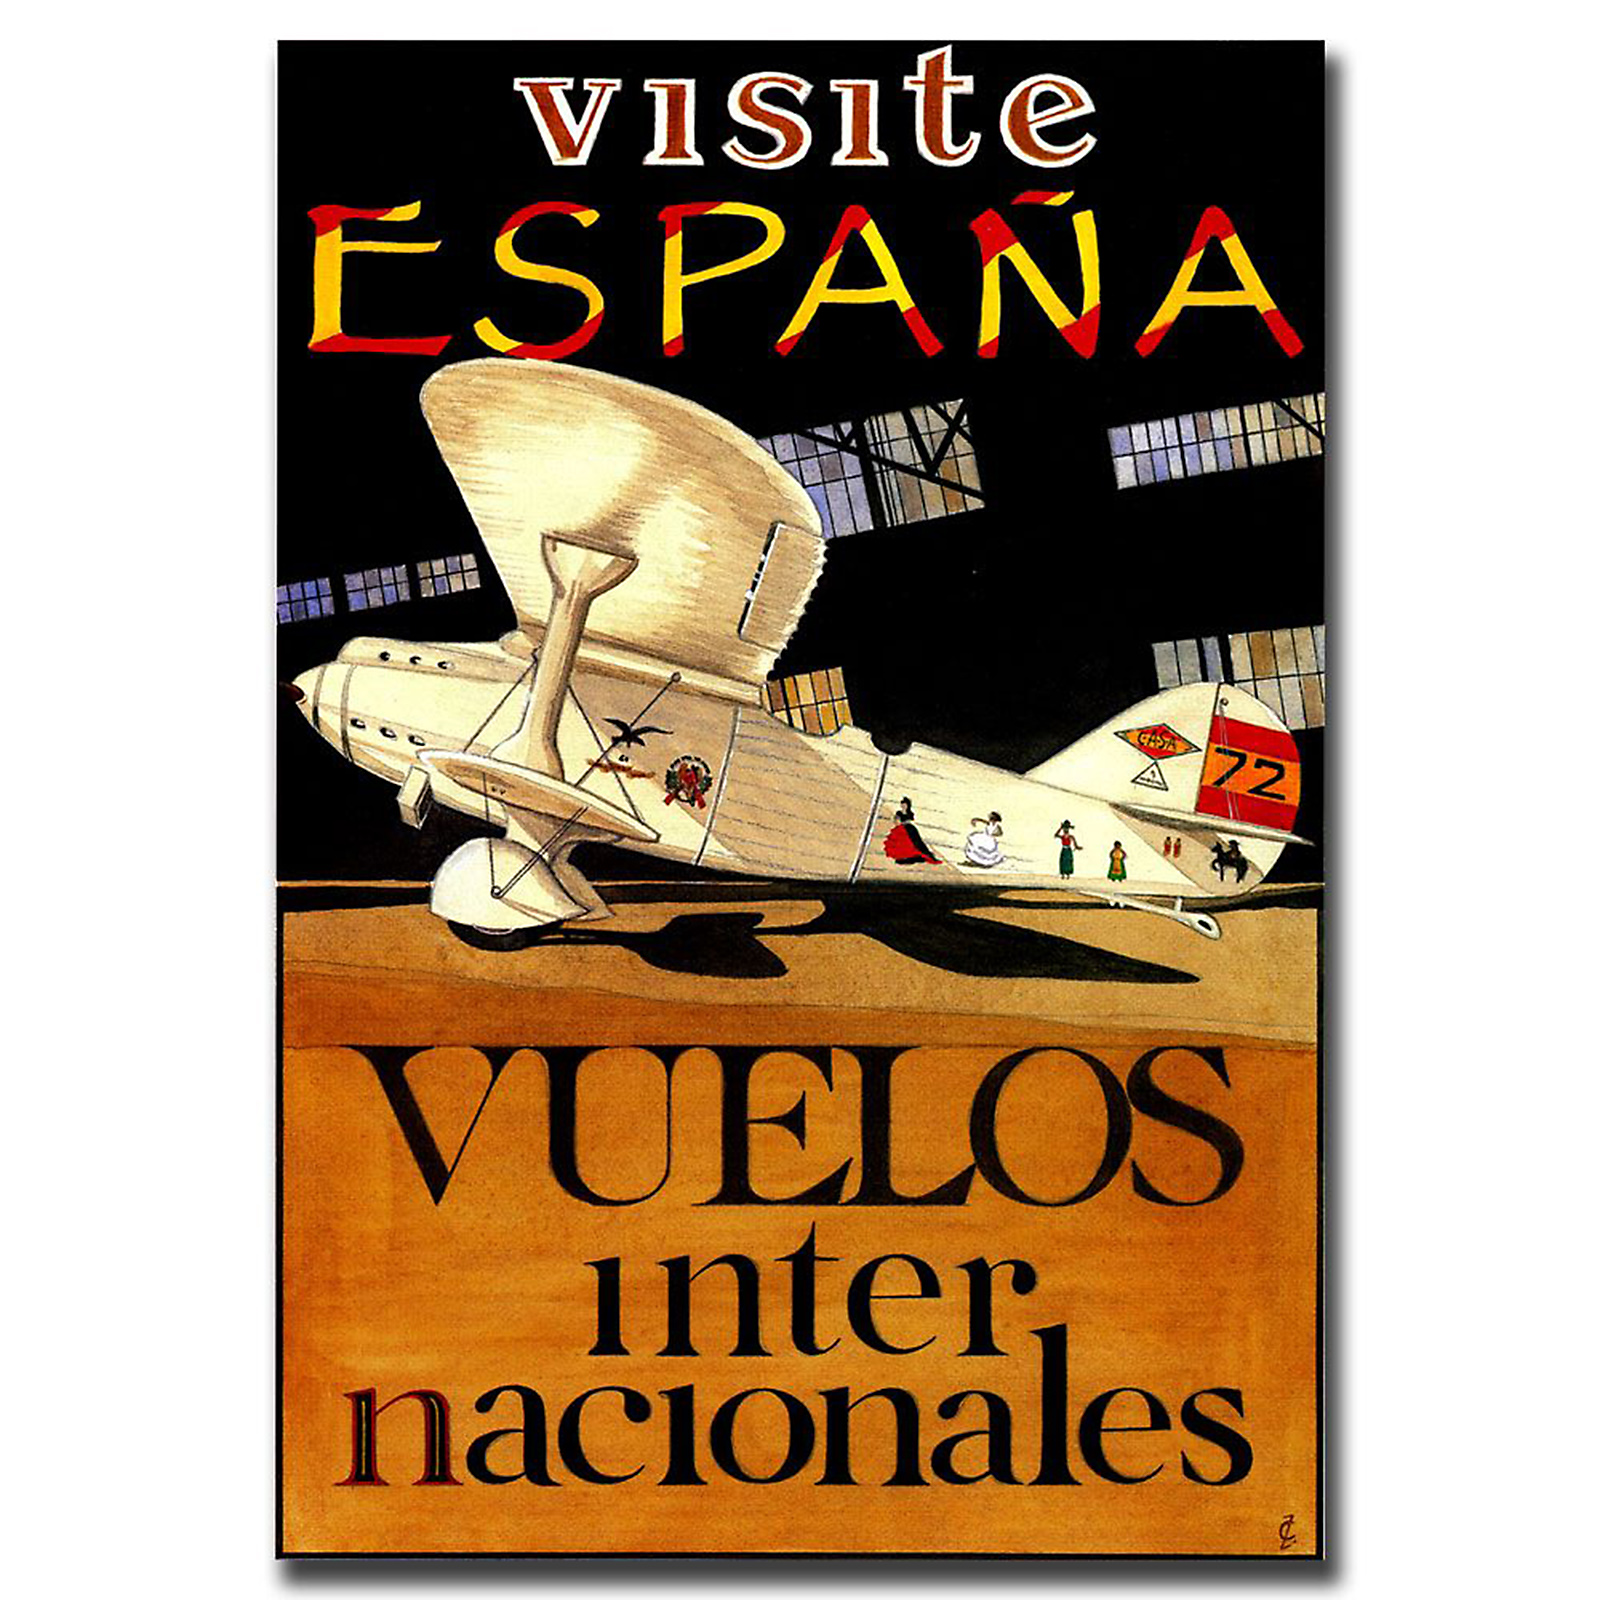 Trademark Global 26x32 inches "Visit Espana"